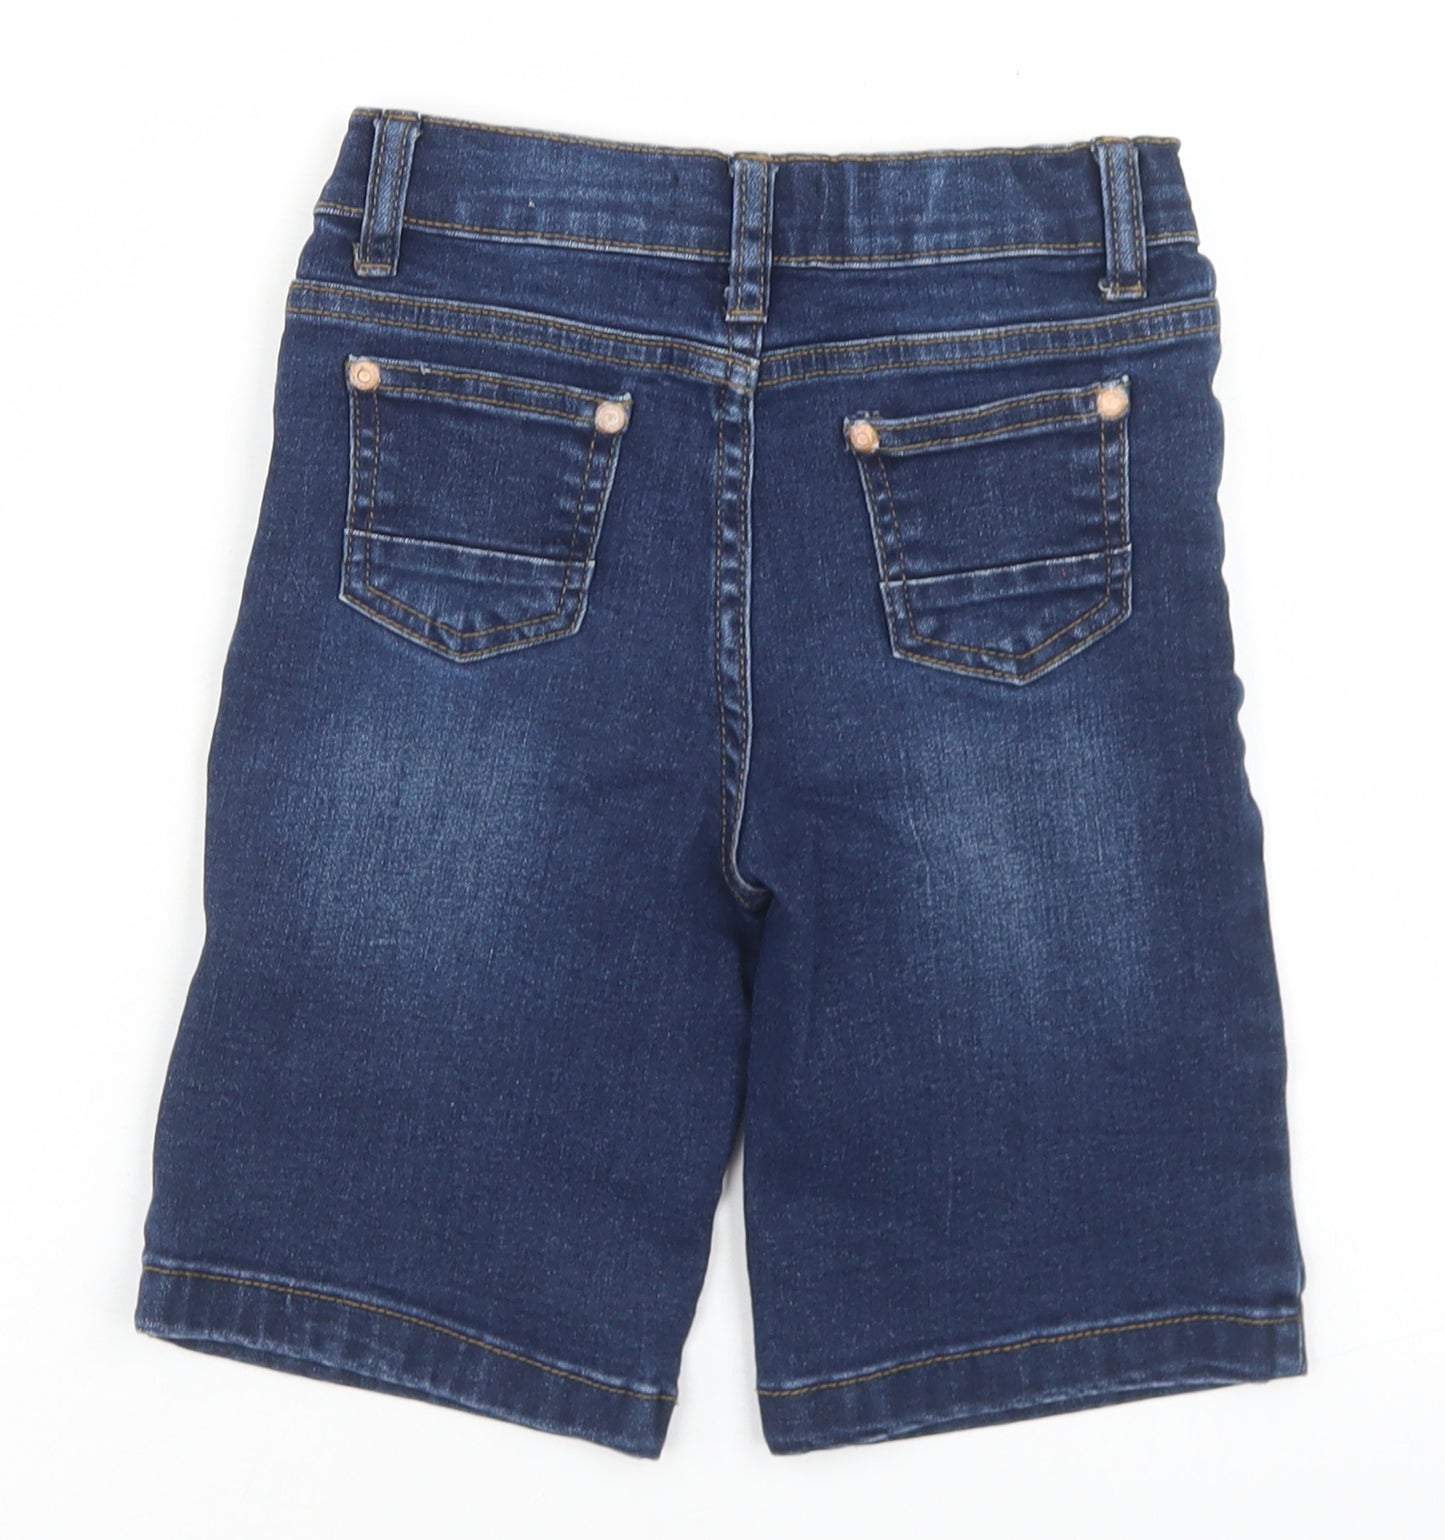 Pep & Co Boys Blue  Cotton Bermuda Shorts Size 5-6 Years  Regular